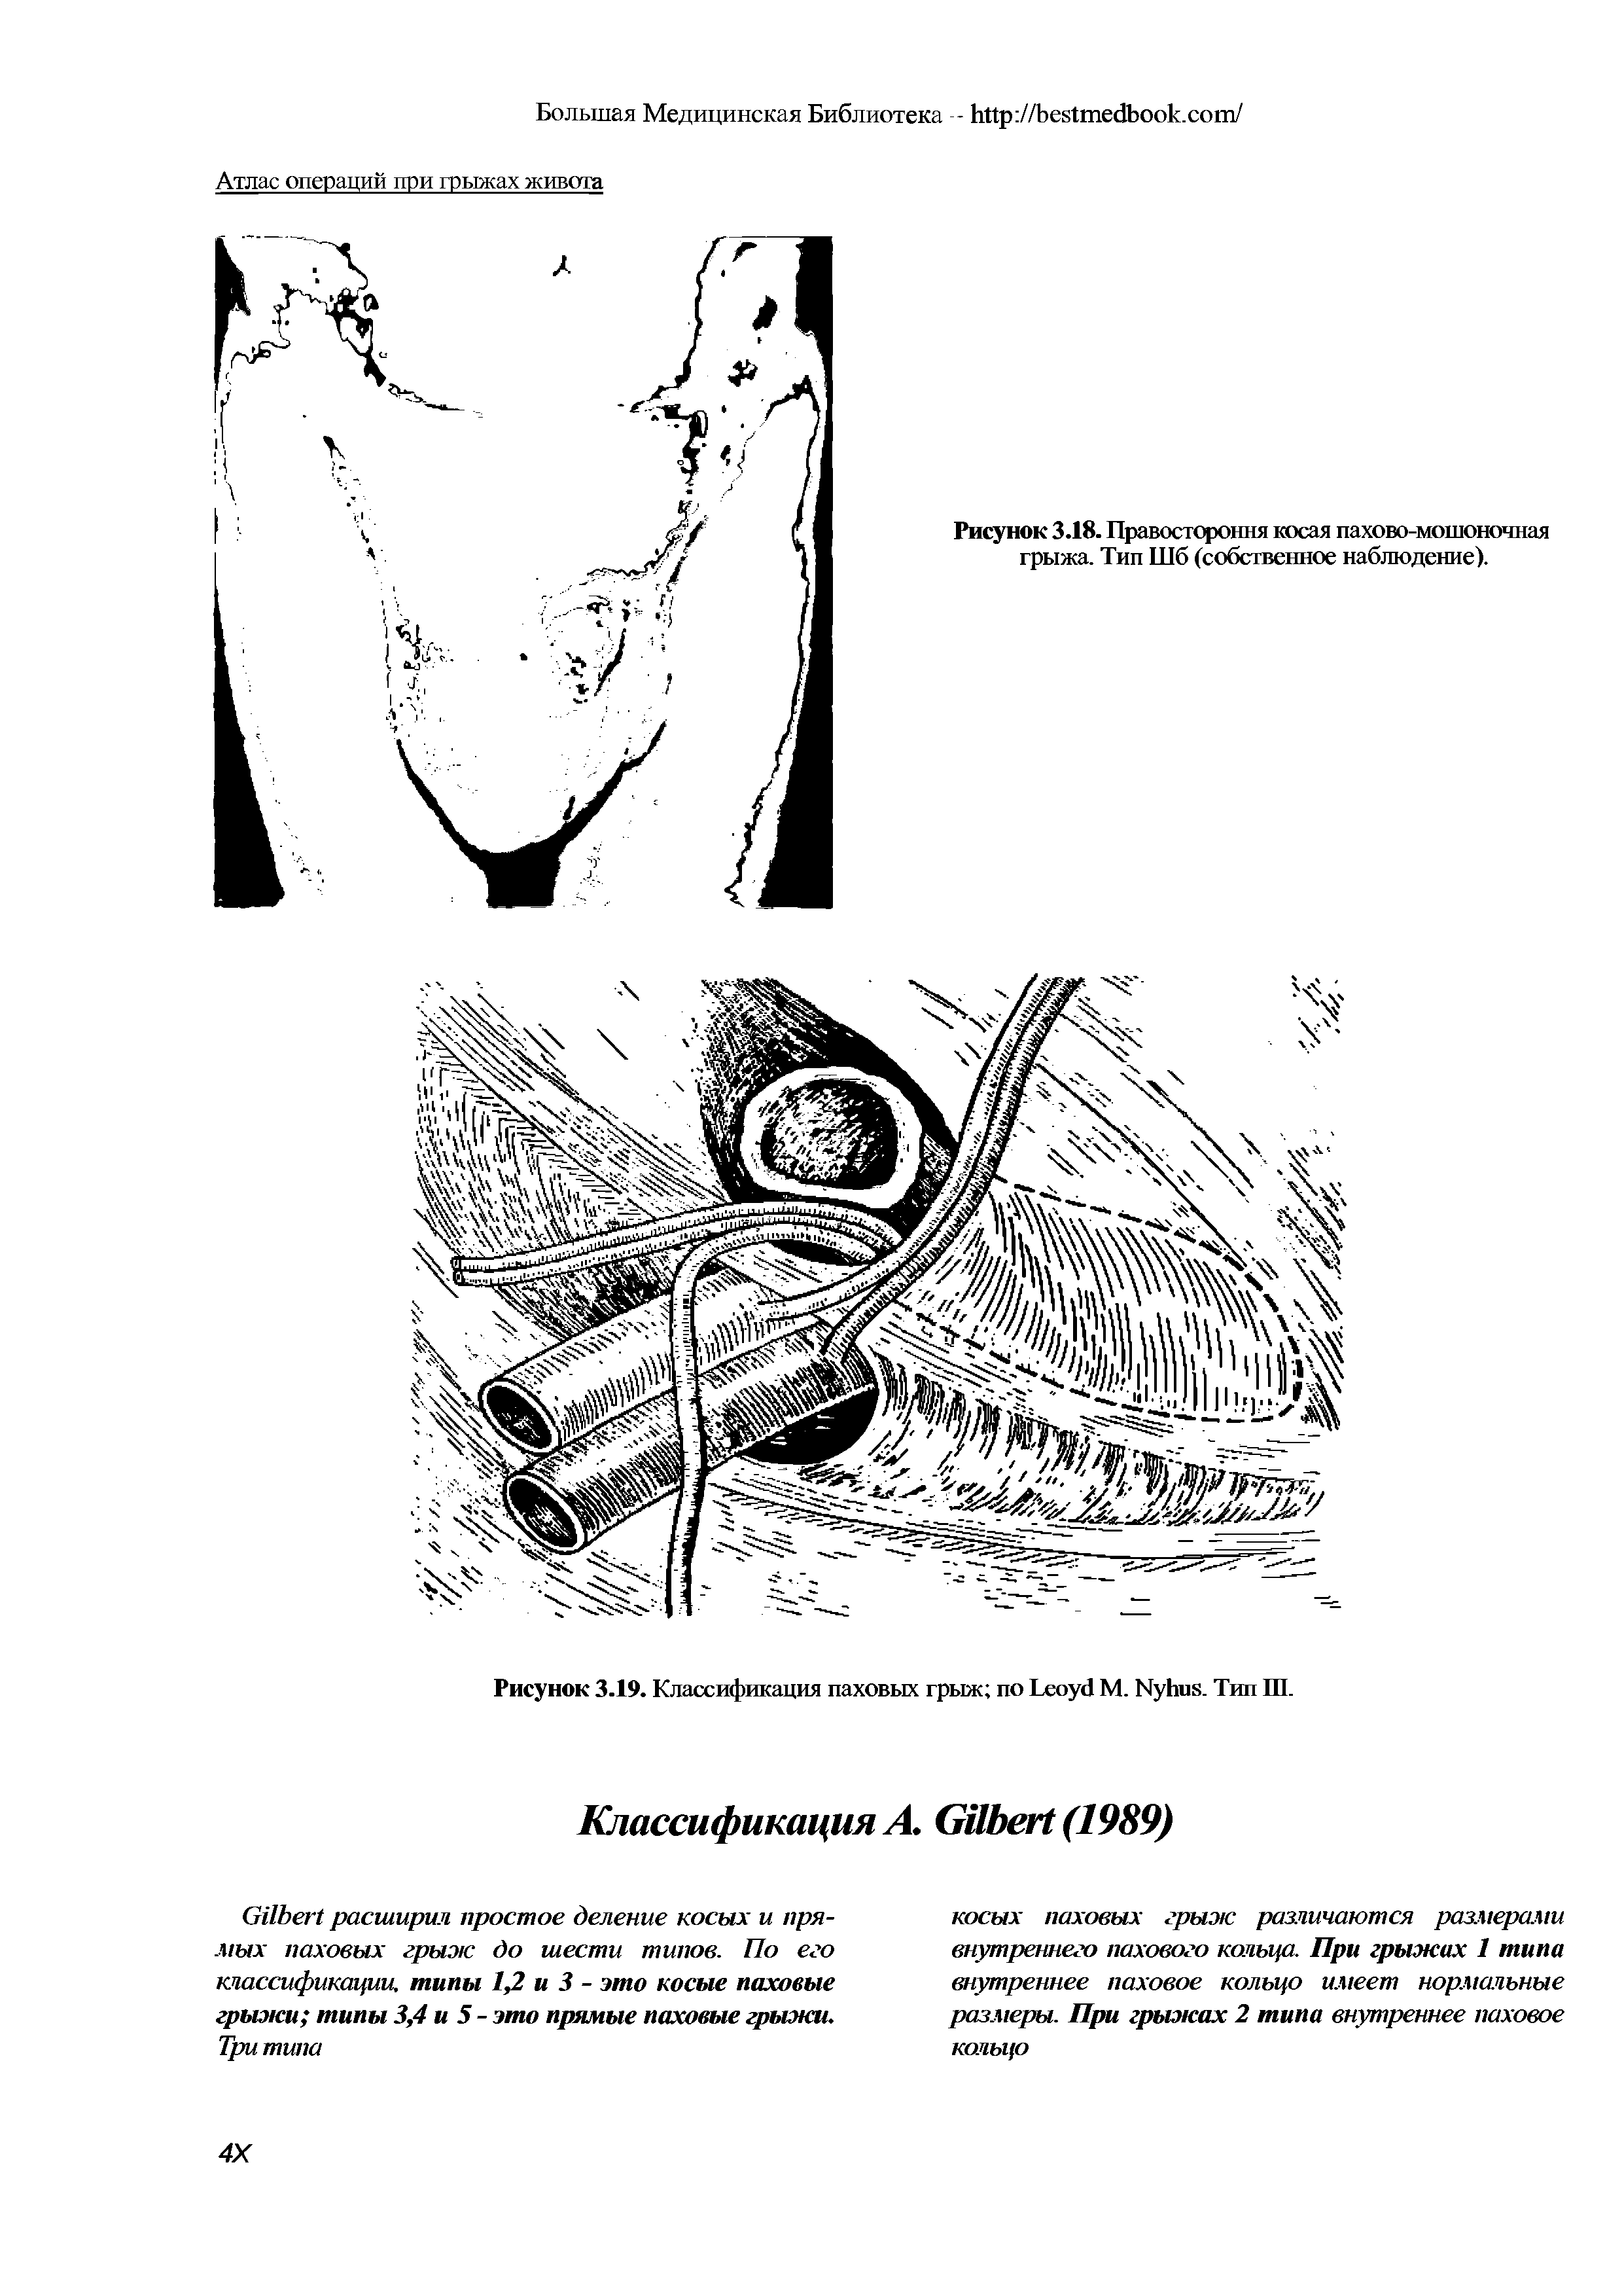 Рисунок 3.19. Классификация паховых грыж по L М. N . Тип Ш.